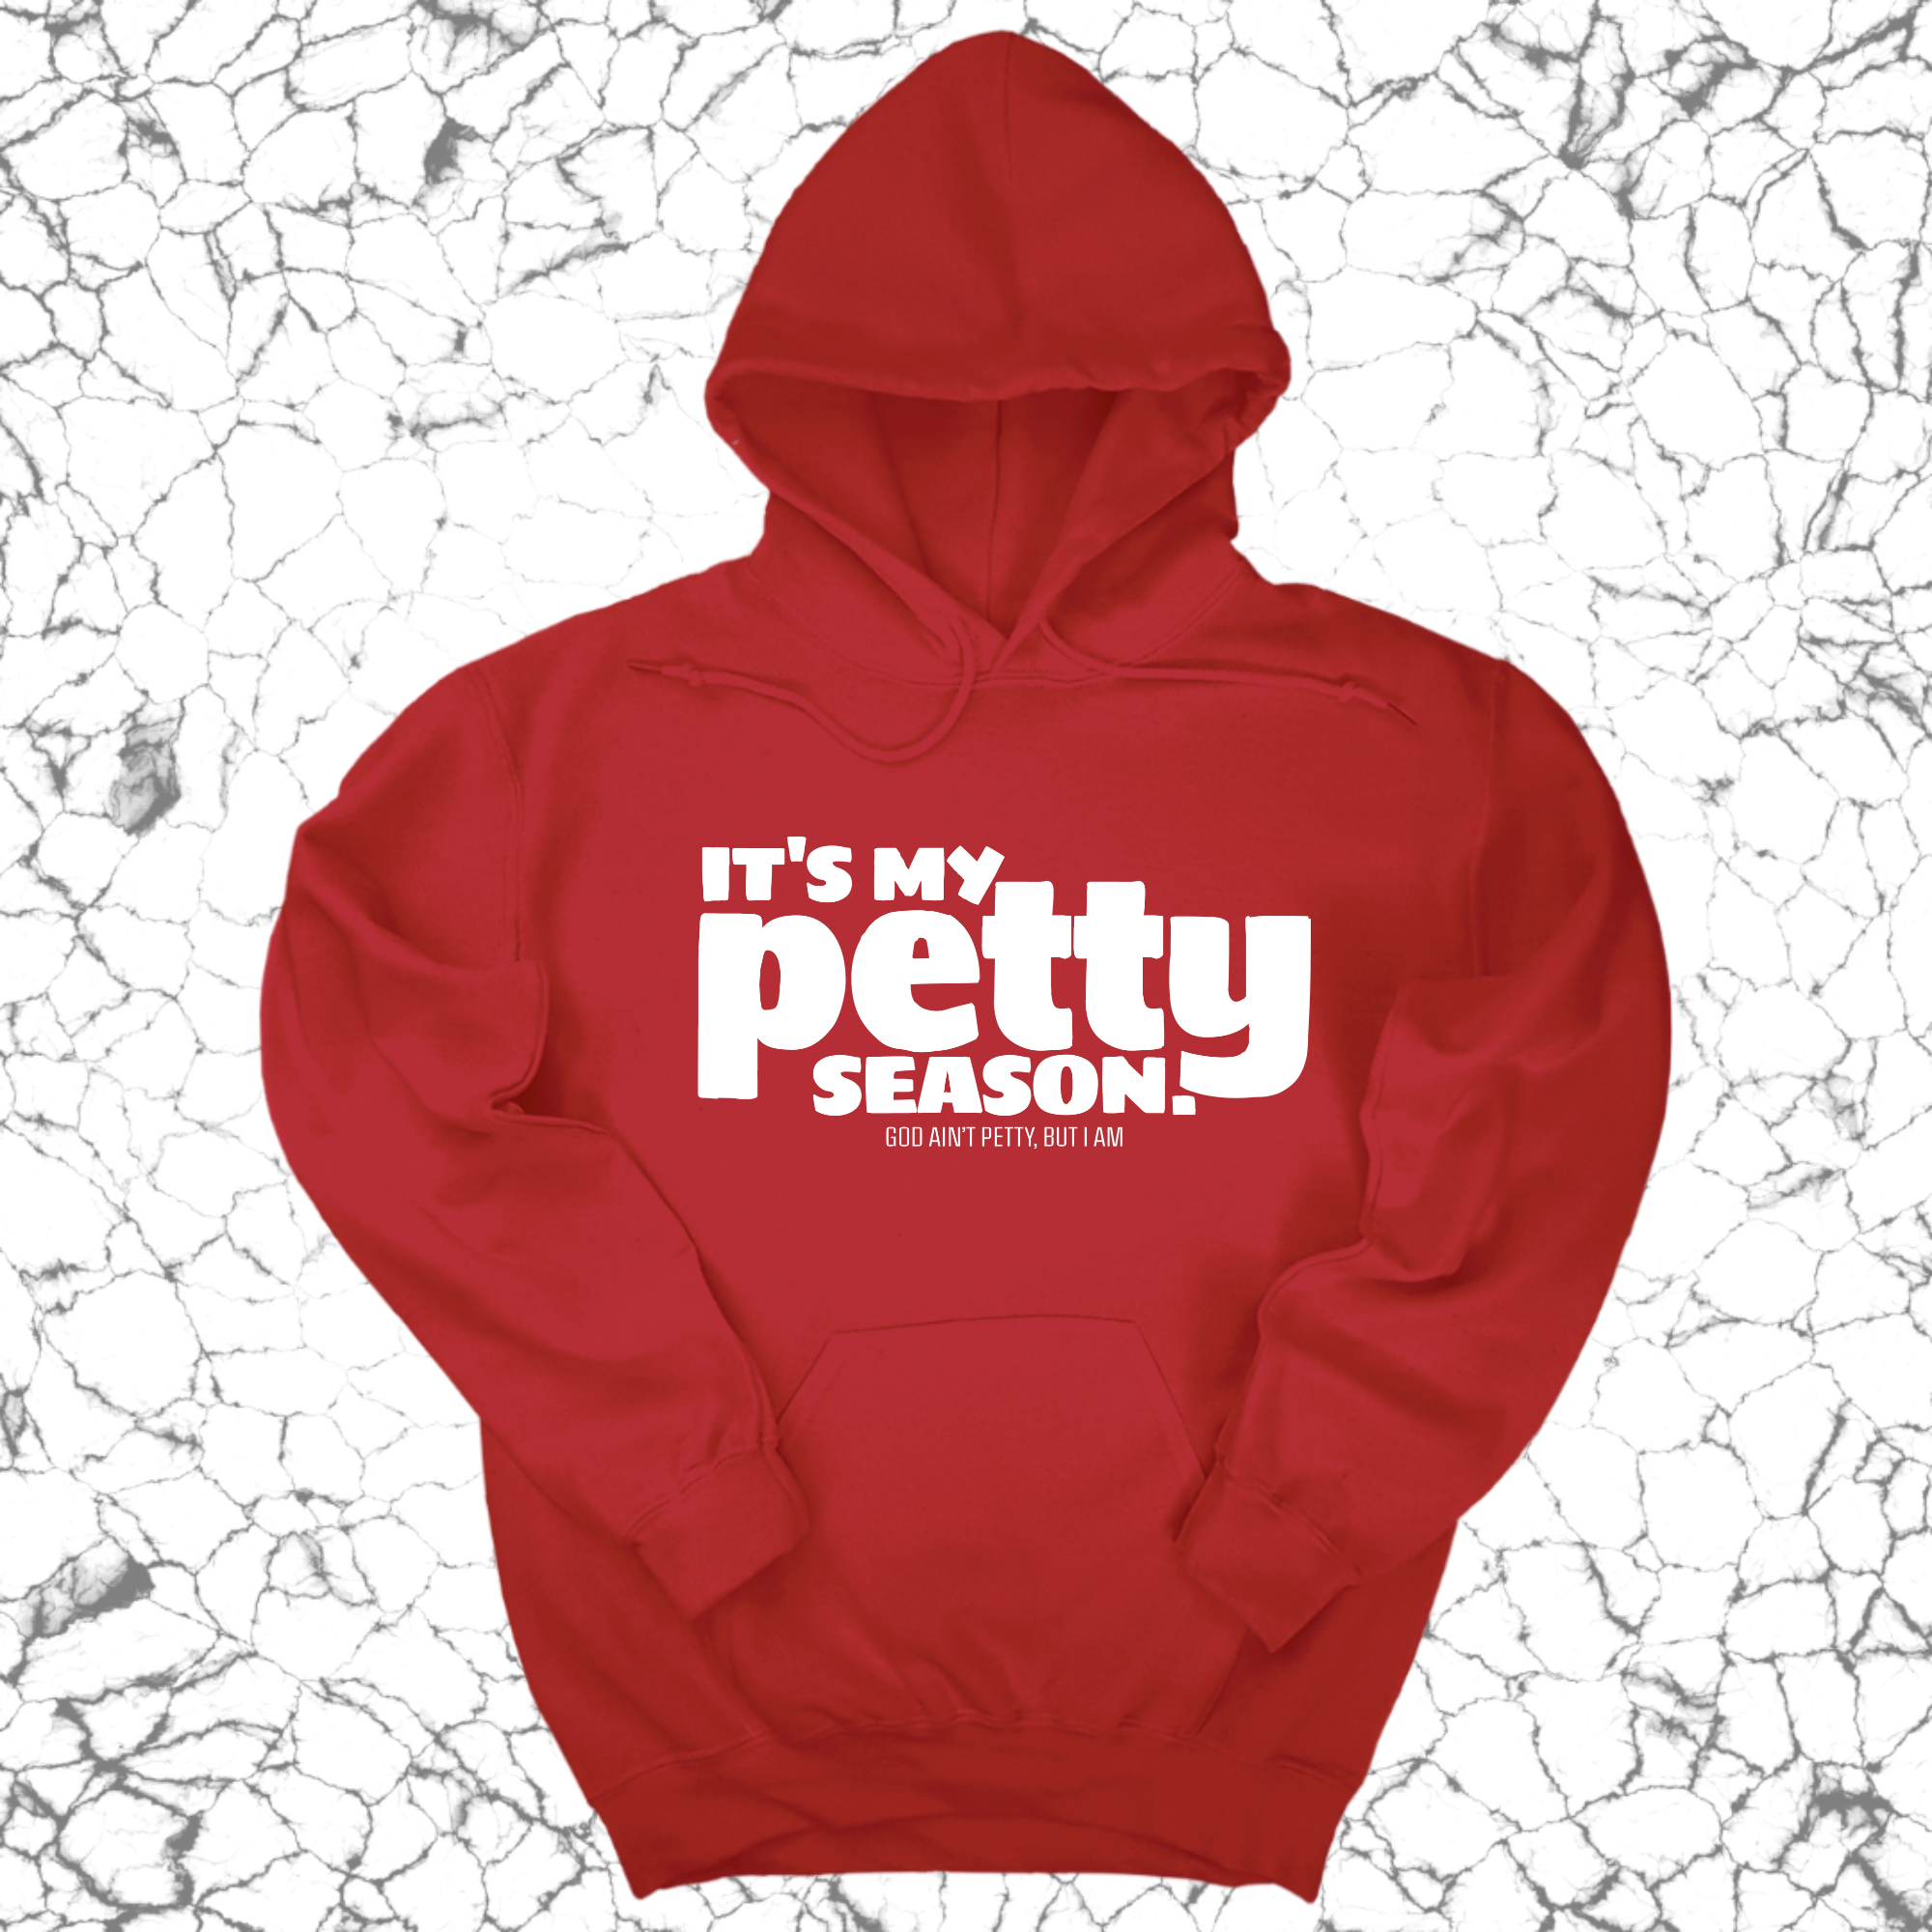 It's my Petty Season Unisex Hoodie-Hoodie-The Original God Ain't Petty But I Am